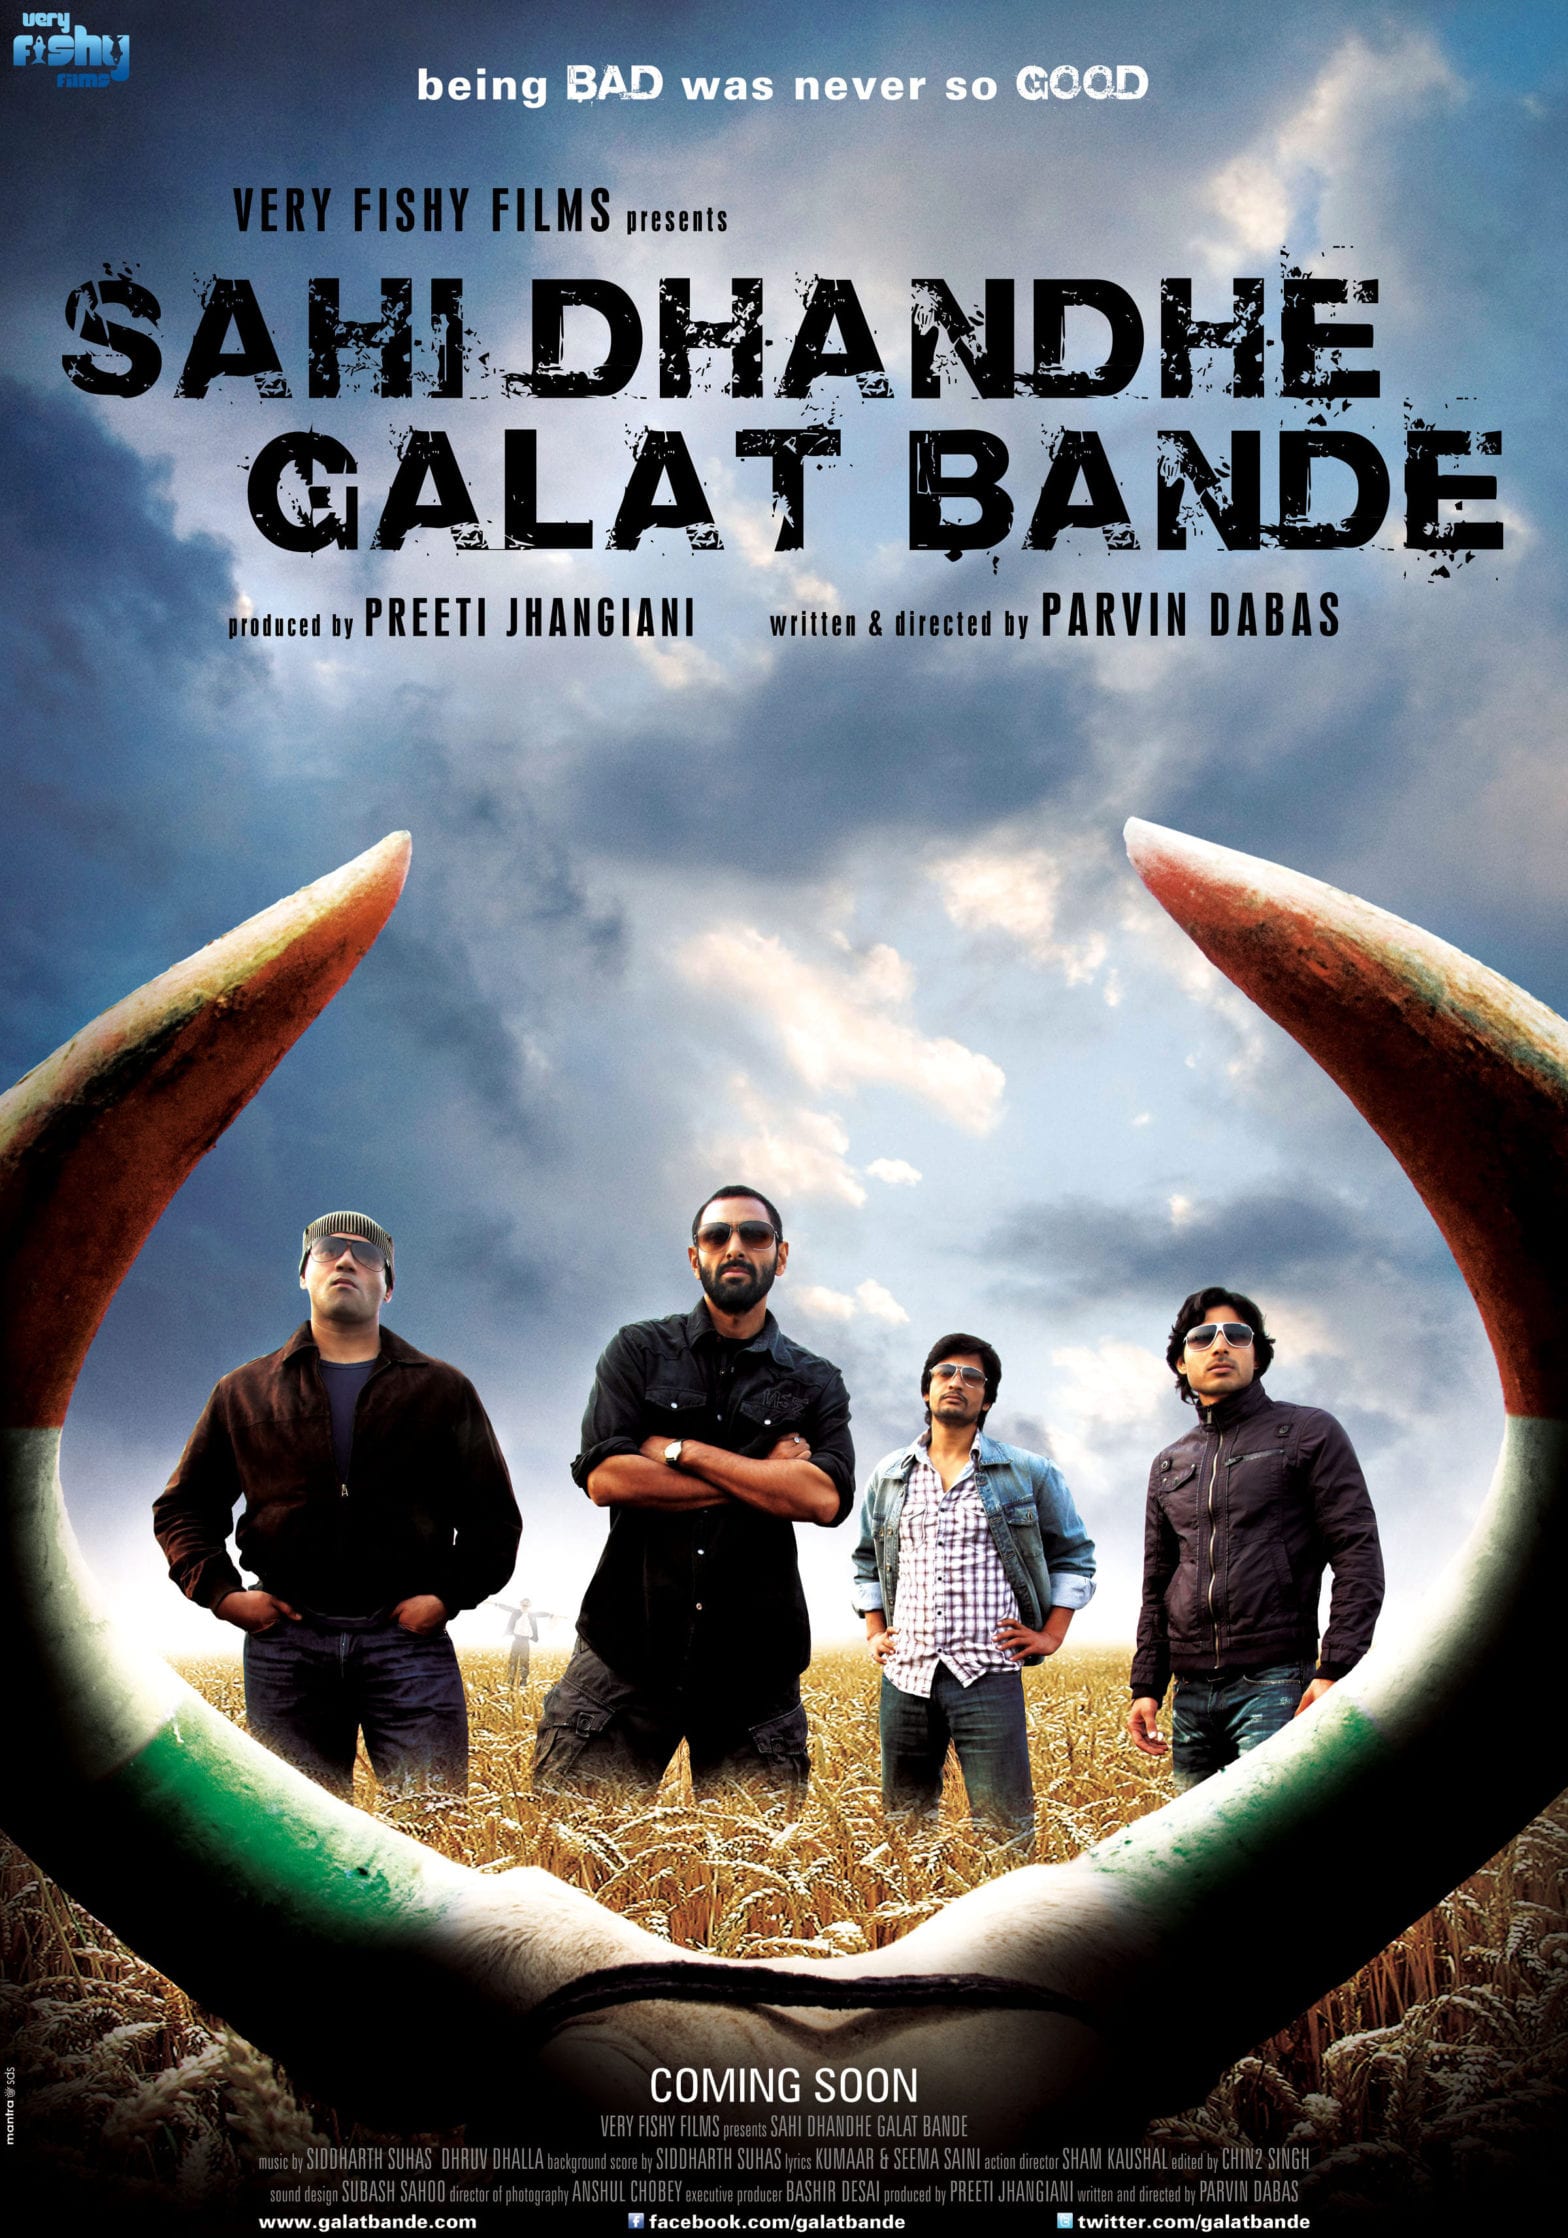 Poster for the movie "Sahi Dhandhe Galat Bande"